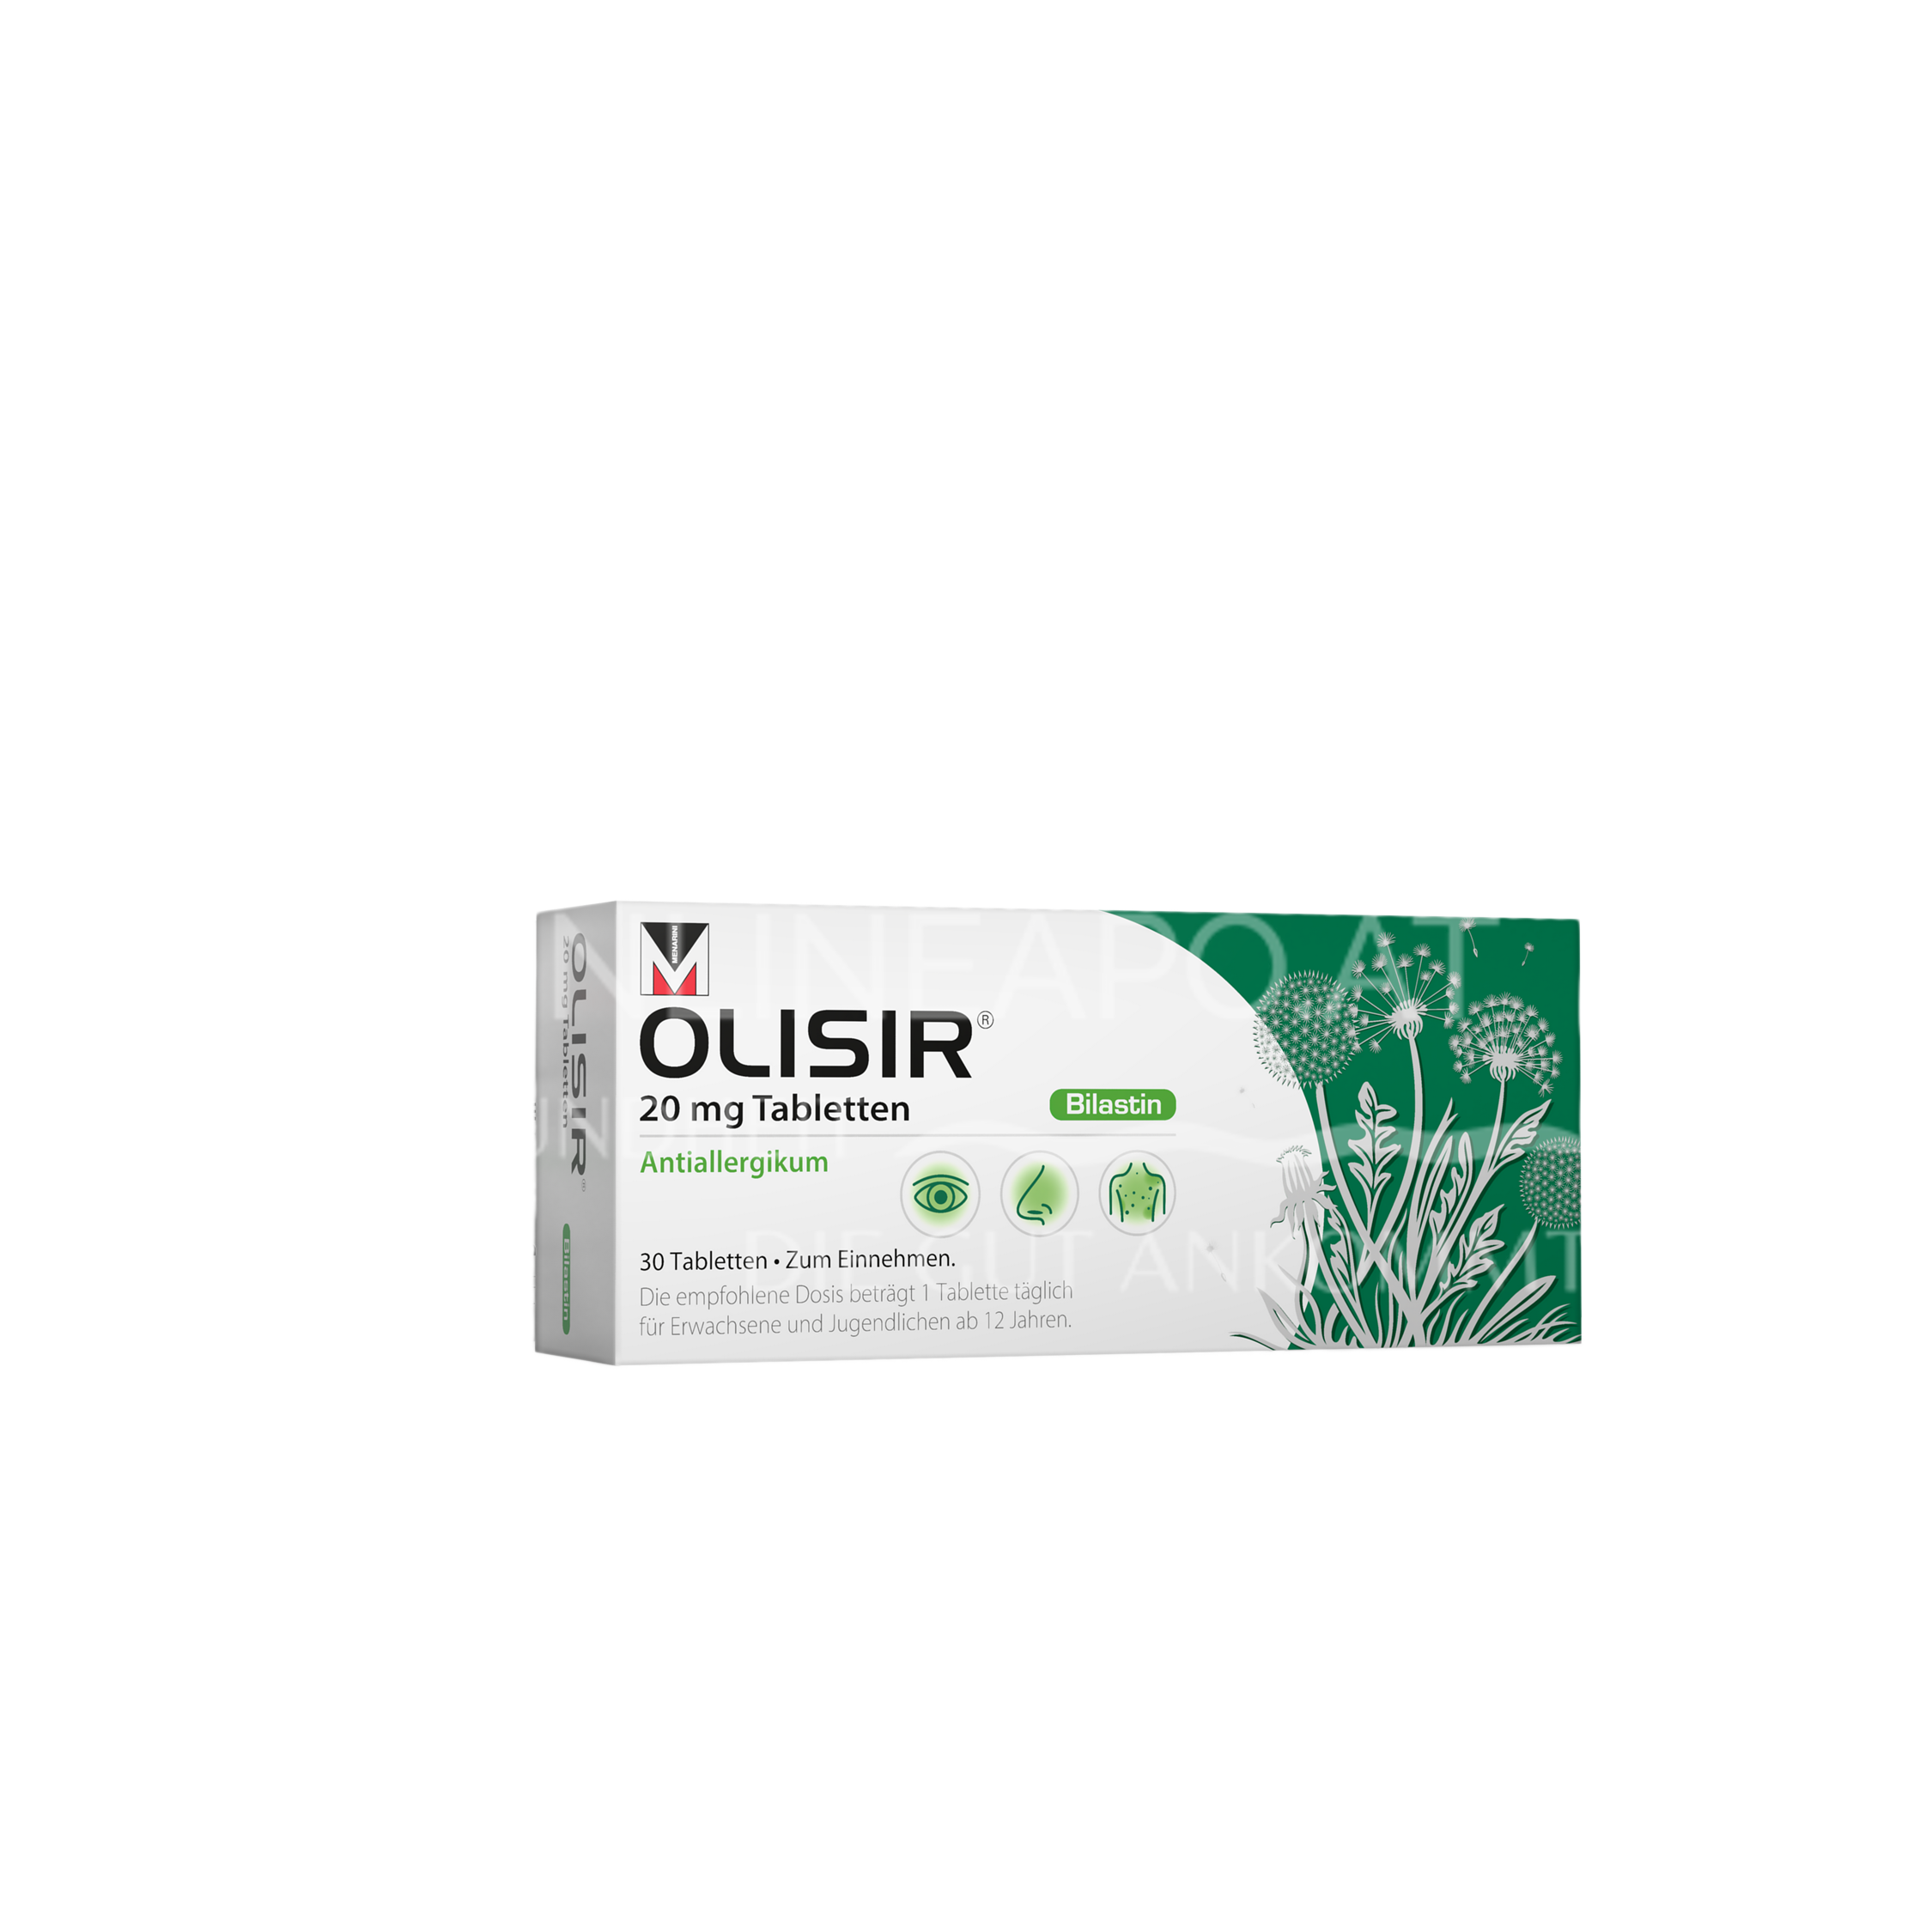 Olisir® 20 mg Tabletten